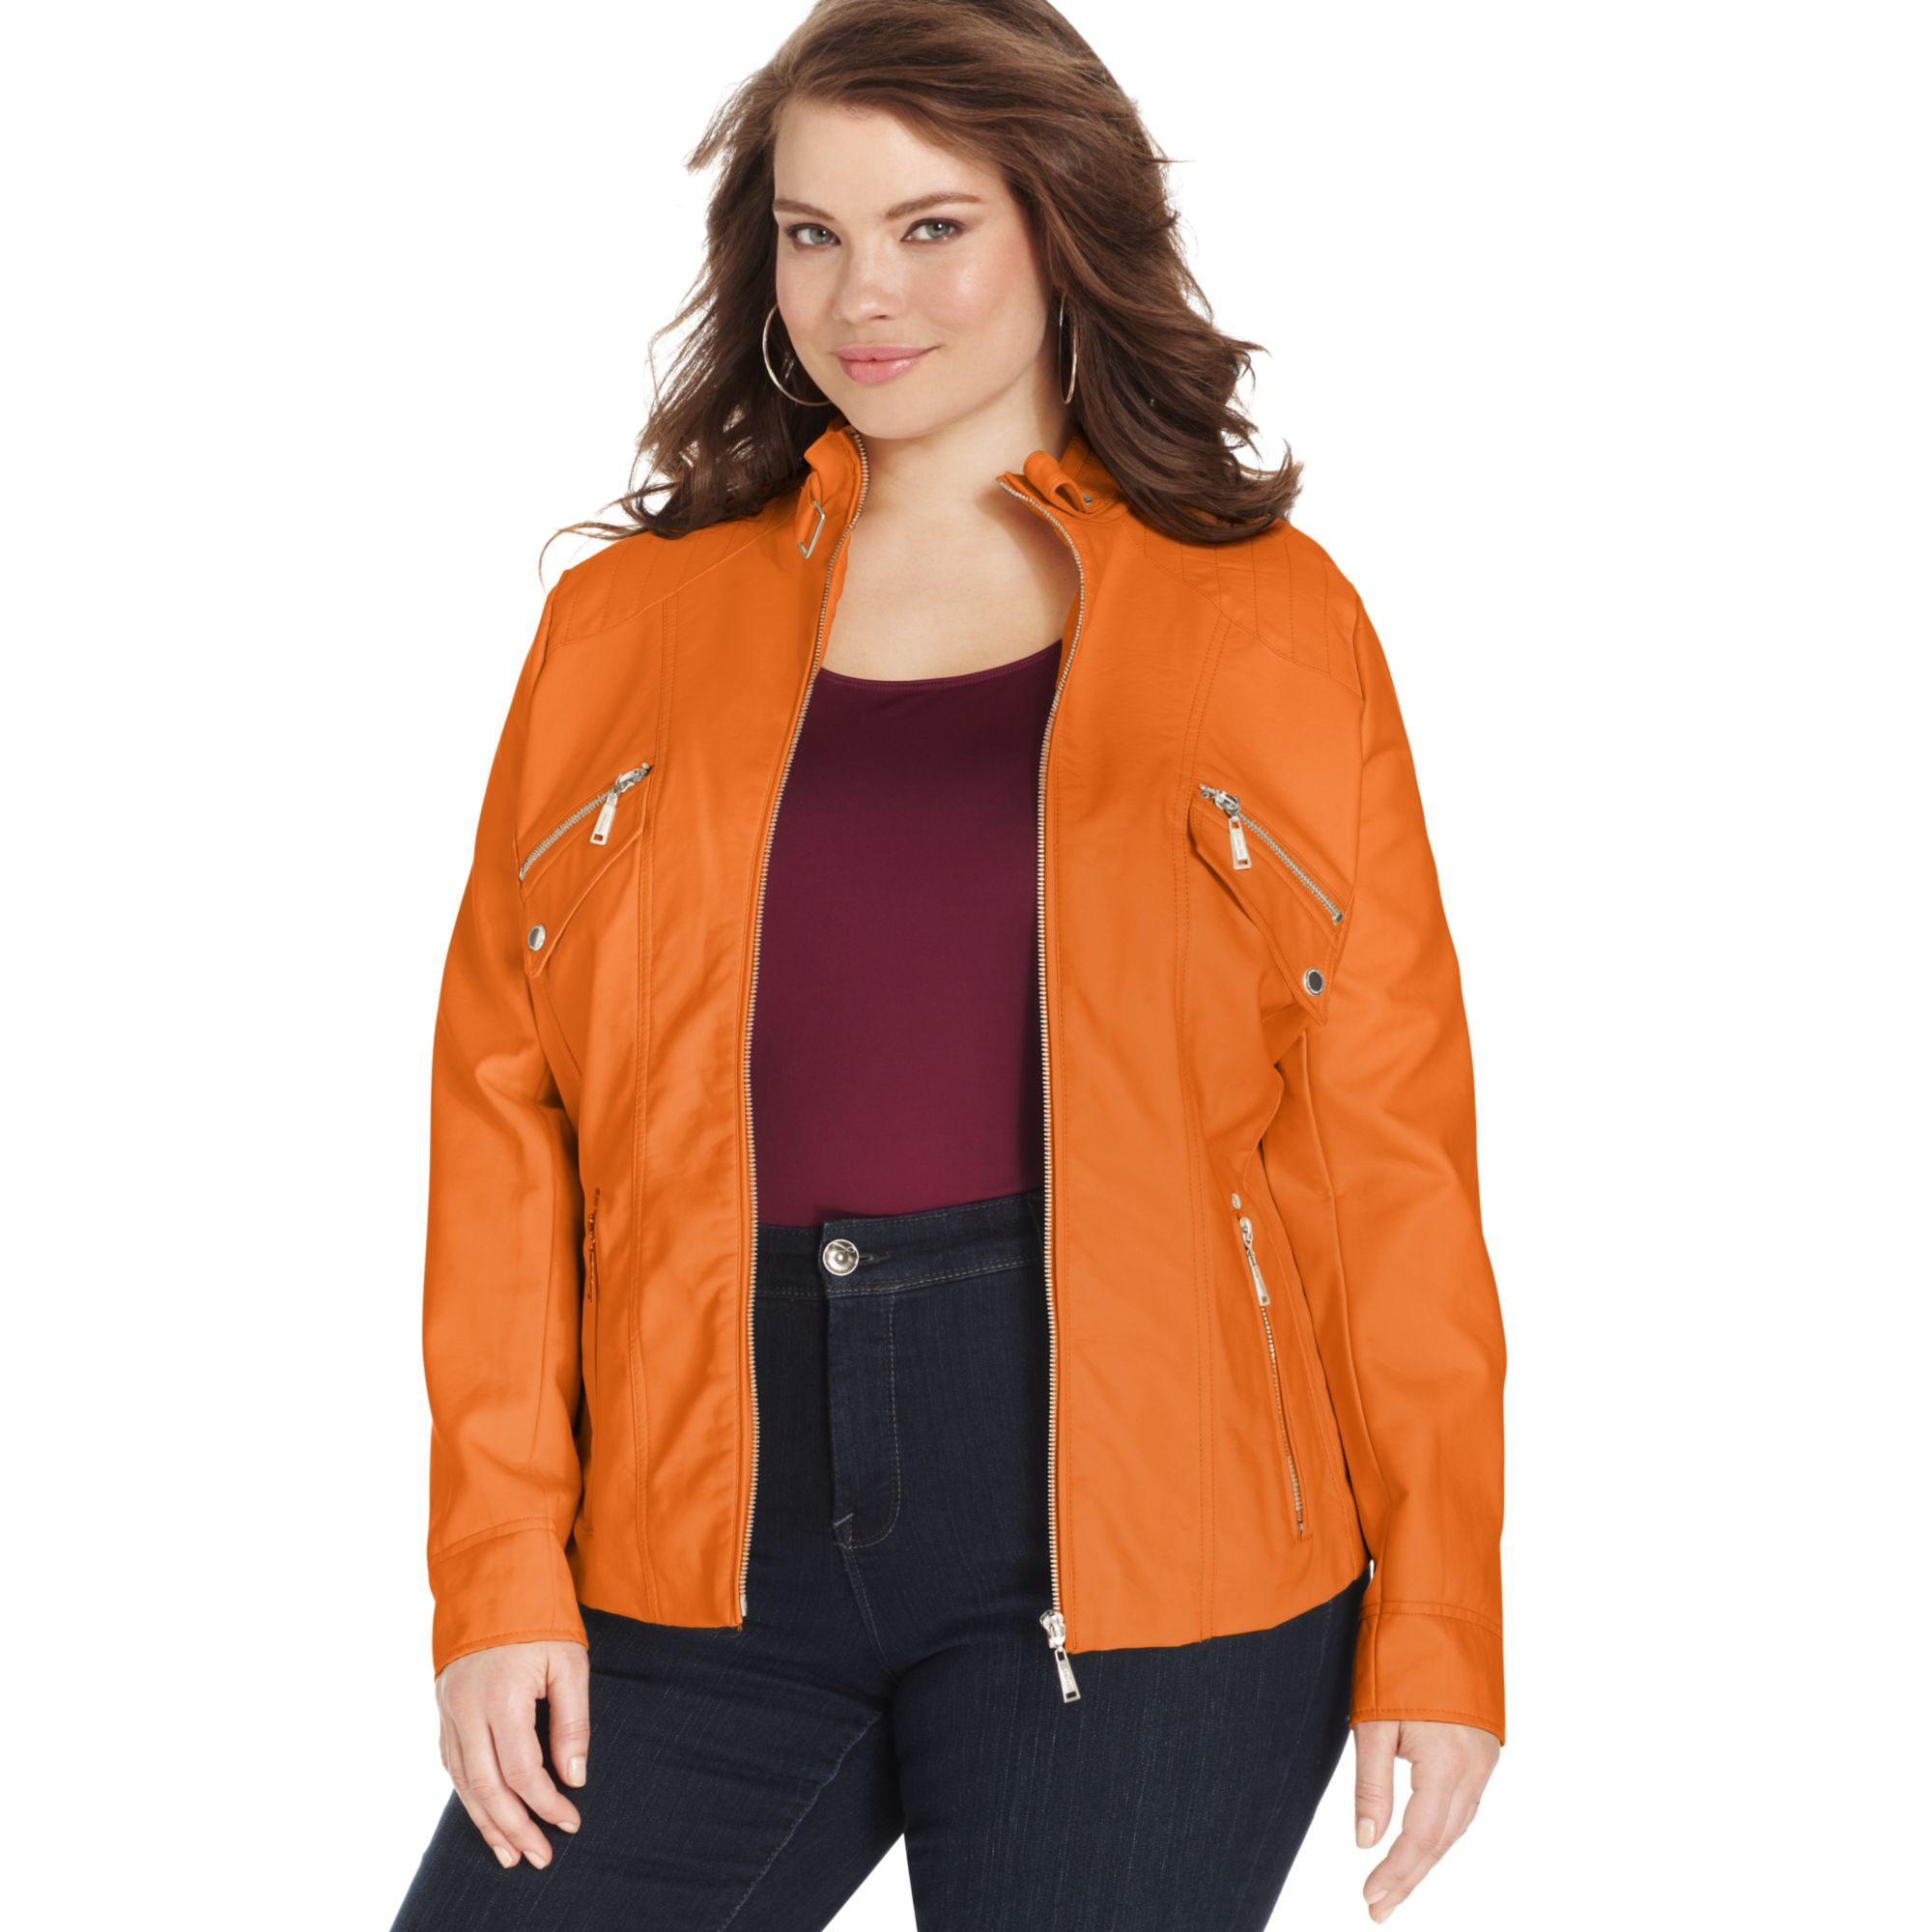 Plus Size Orange Jacket Online Sale, UP TO 61% OFF